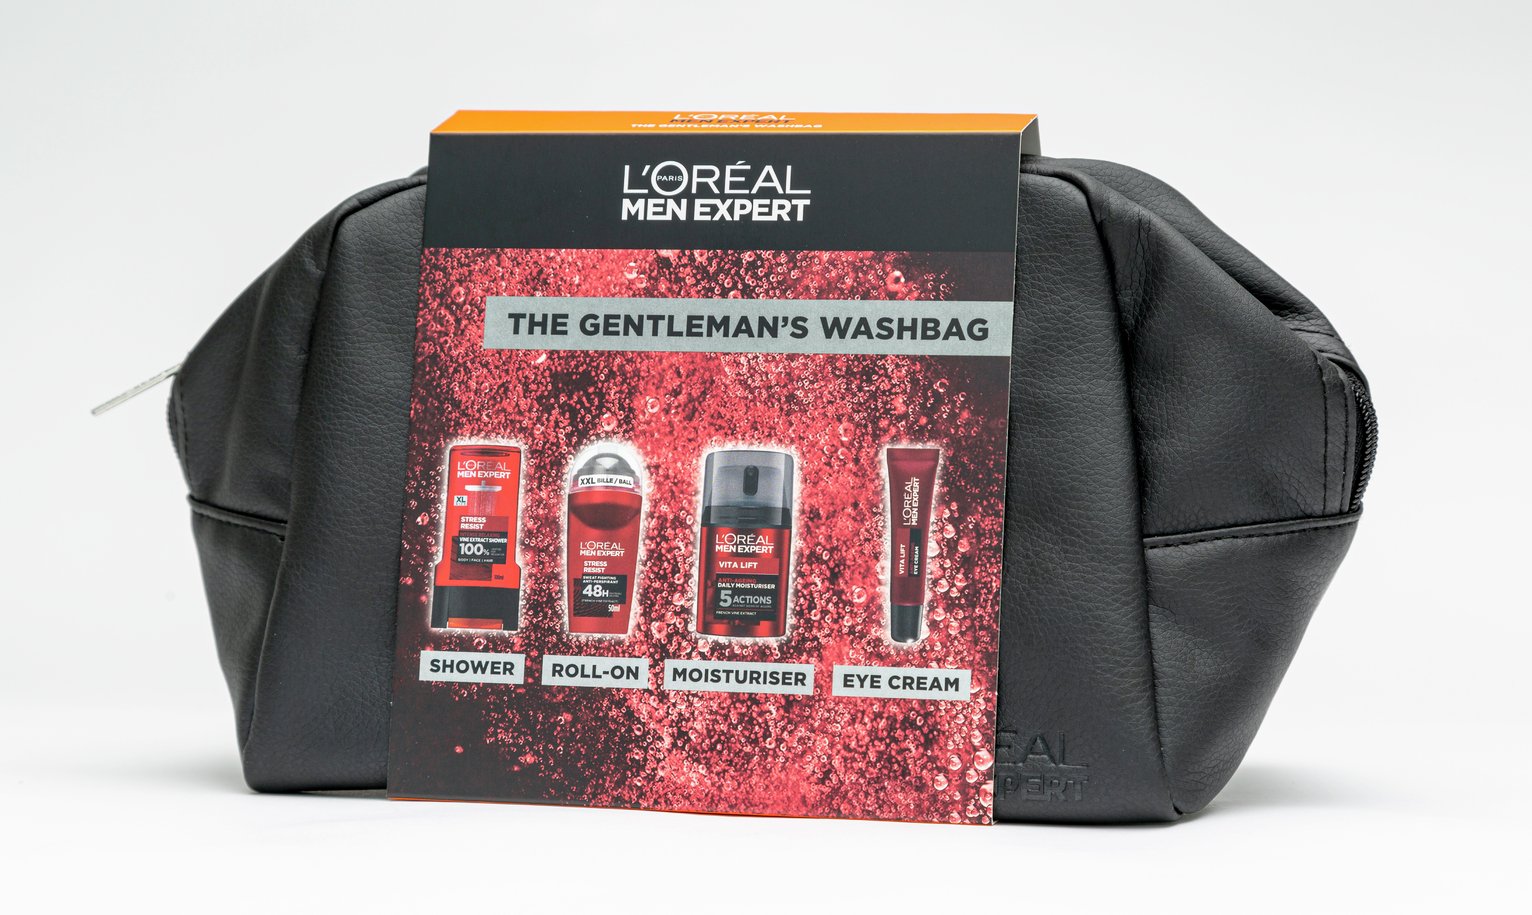 L'Oreal Paris Men Expert Gentlemans Washbag